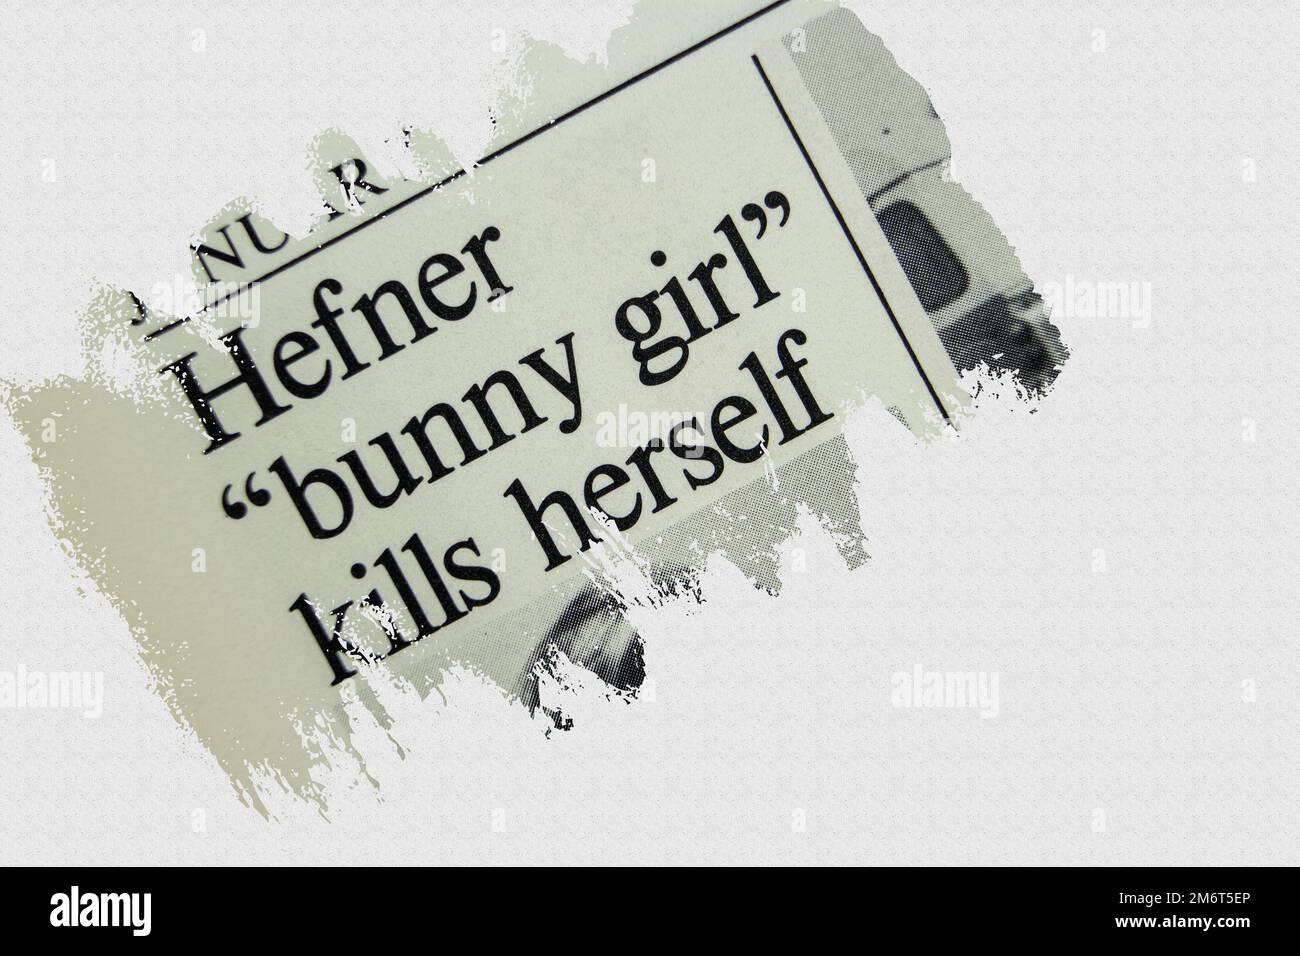 news story from 1975 newspaper headline article title - Hefner bunny girl kills herself Stock Photo